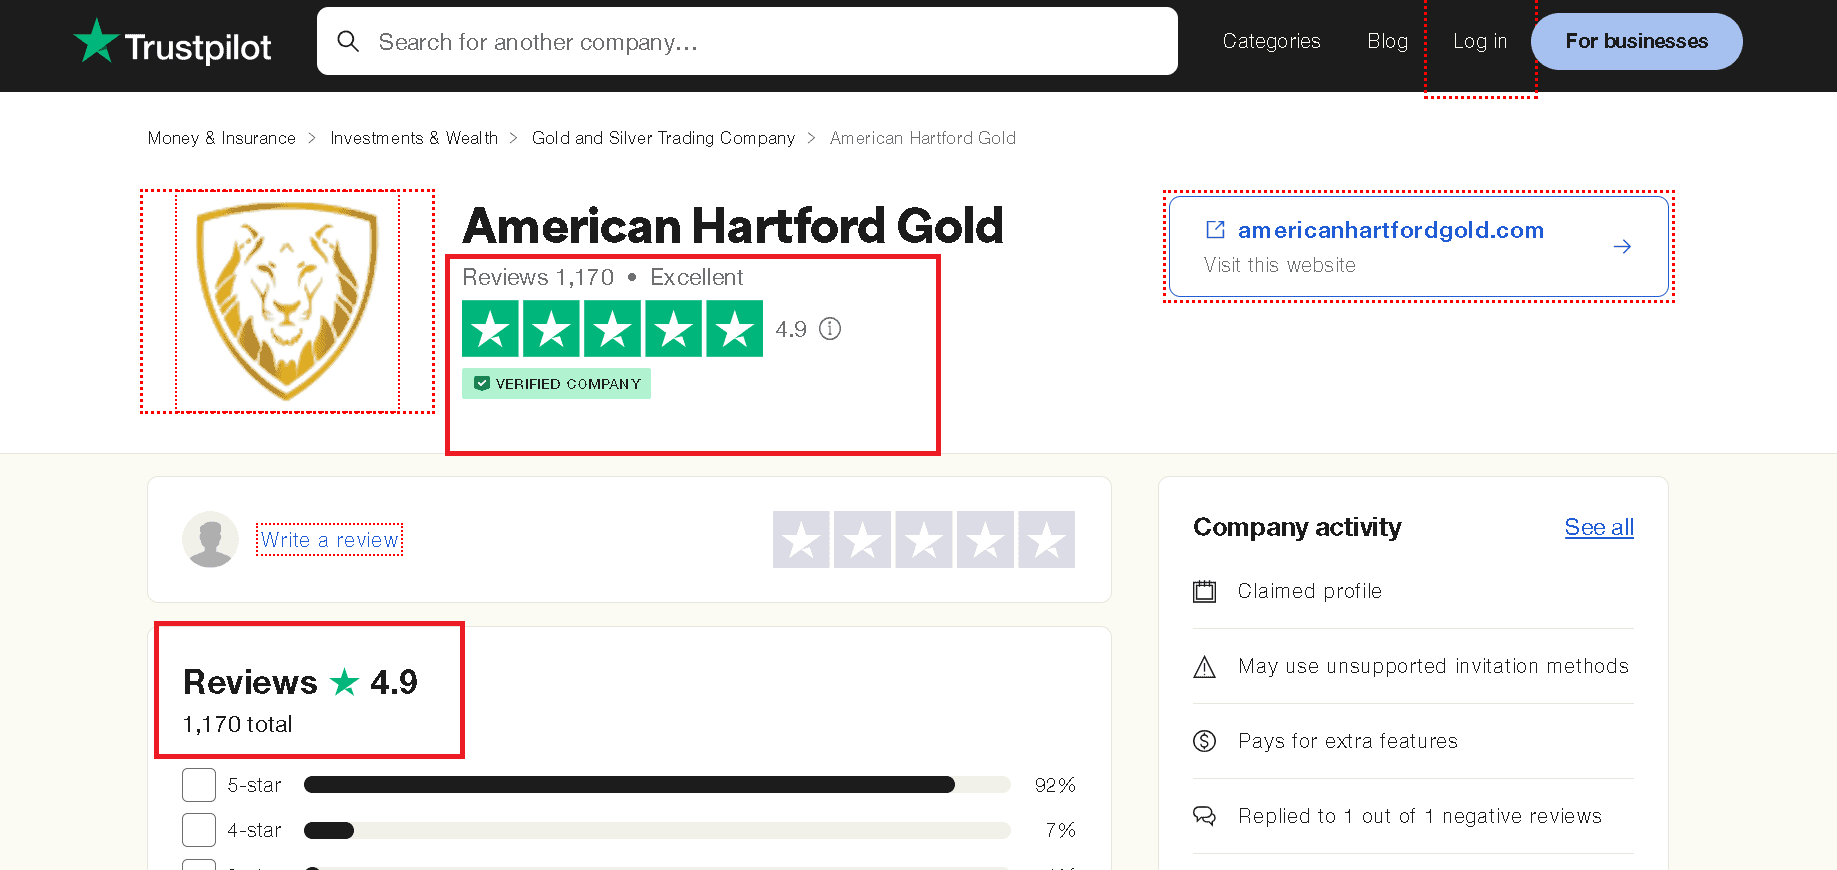 American Hartford Gold Trustpilot score